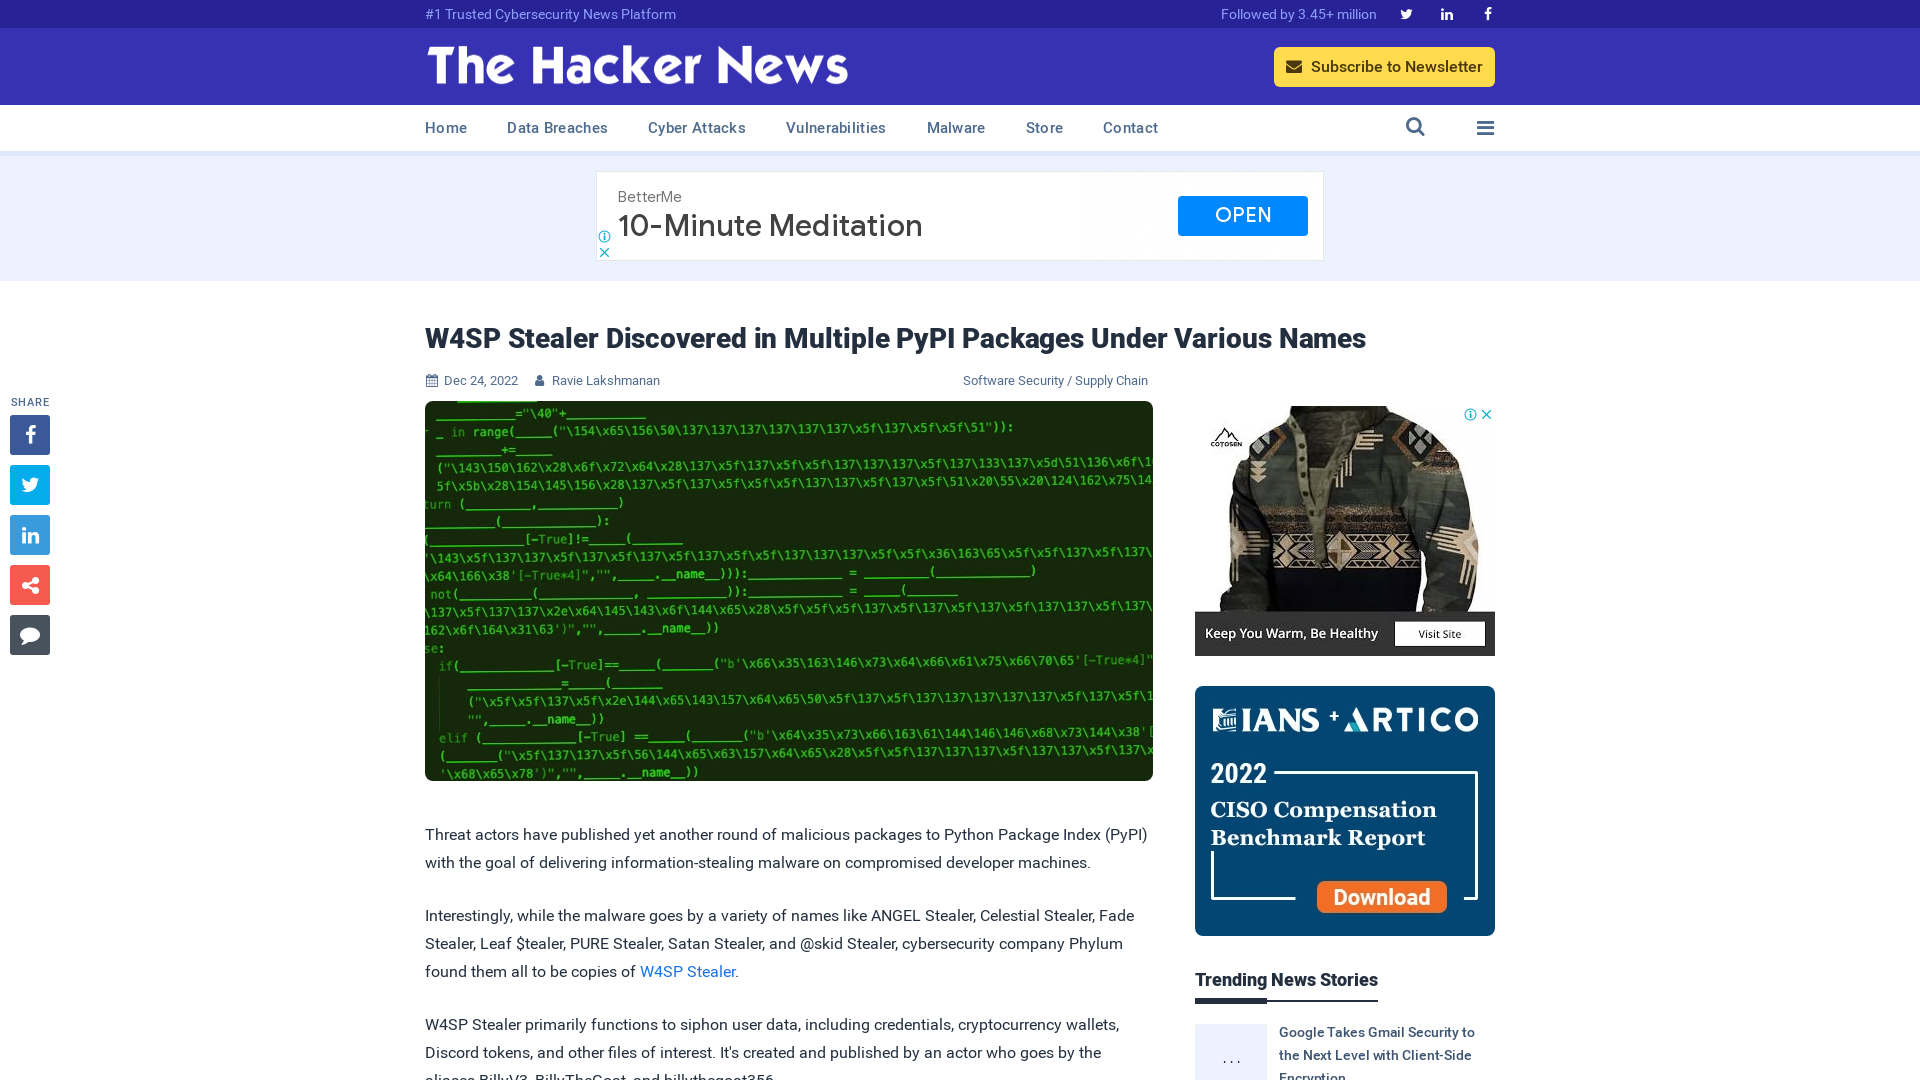 W4SP Stealer Discovered in Multiple PyPI Packages Under Various Names